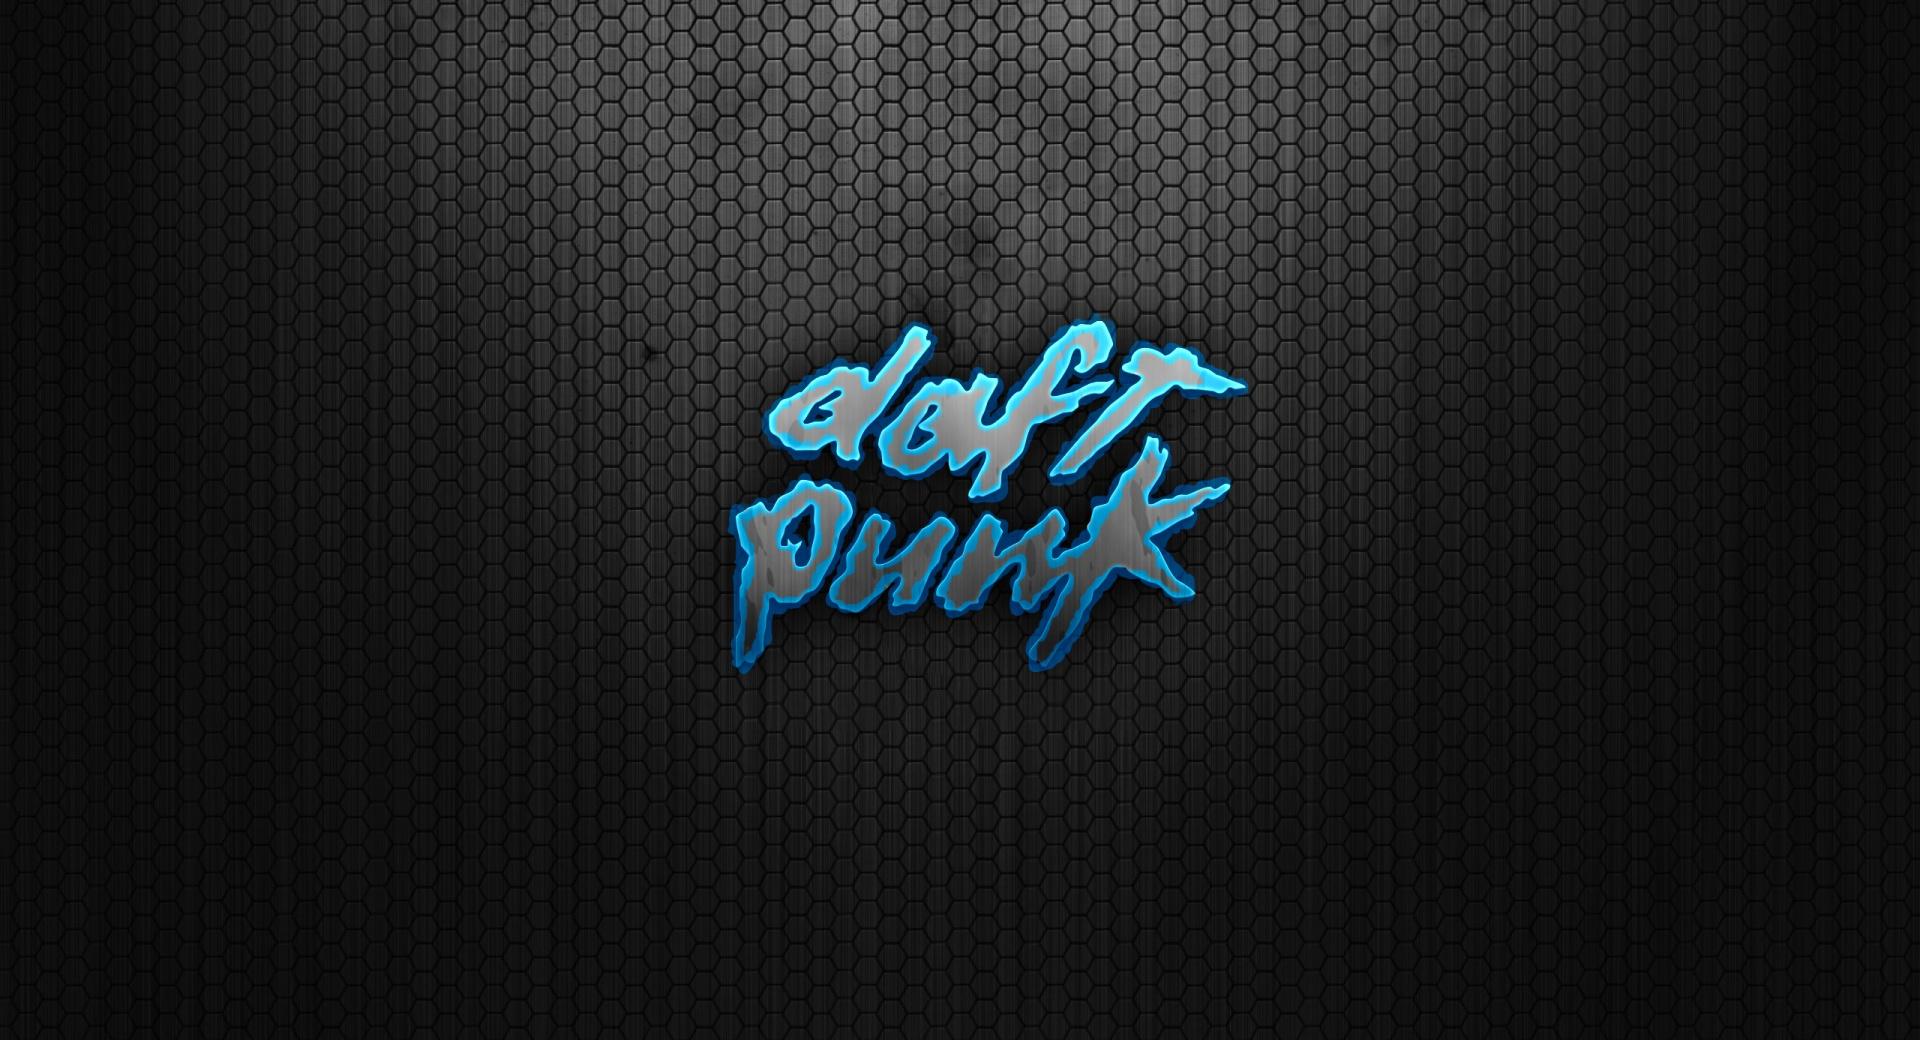 Daft Punk Logo at 2048 x 2048 iPad size wallpapers HD quality